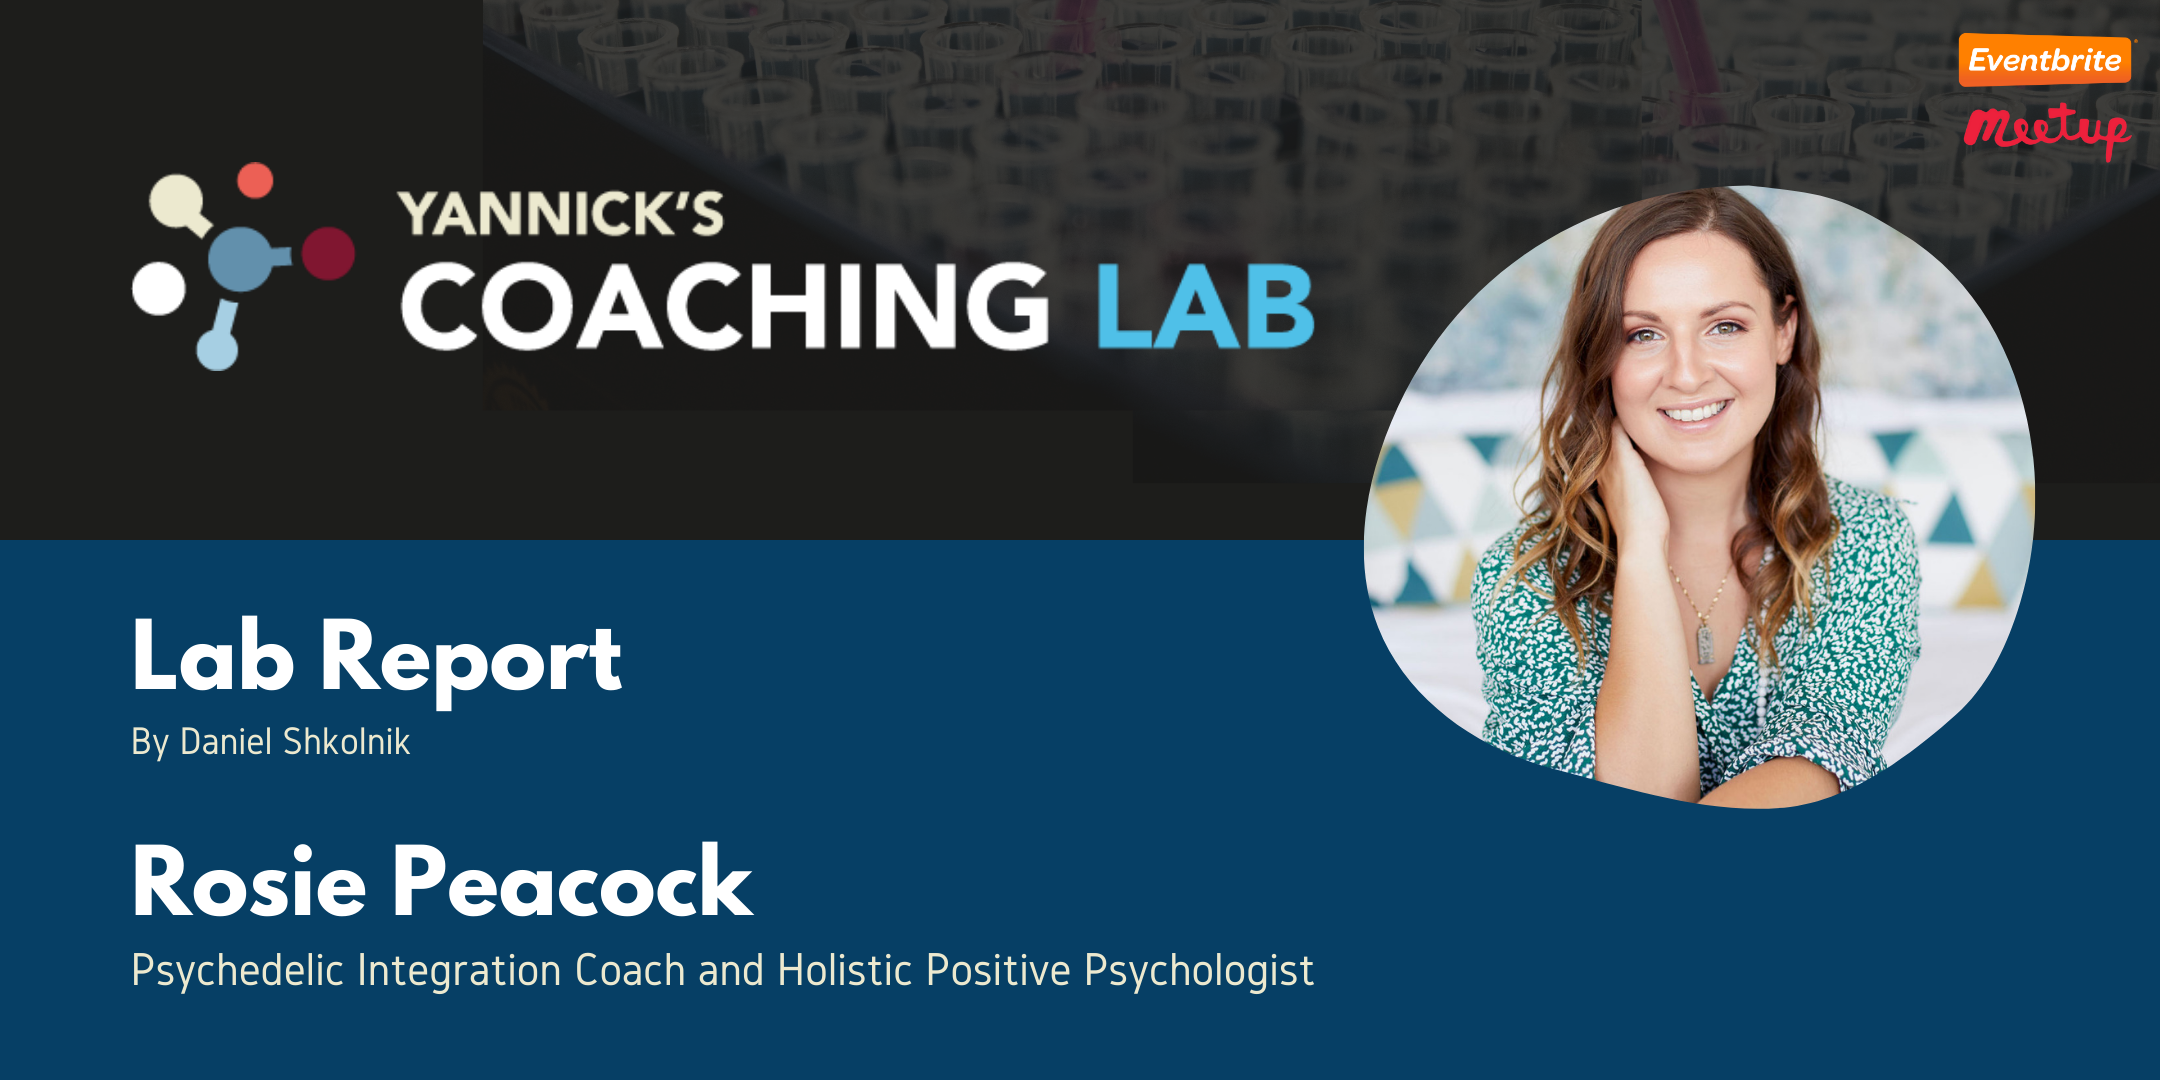 Yannick’s Coaching Lab #22 - Rosie Peacock
Lab Report by Daniel Lev Shkolnik